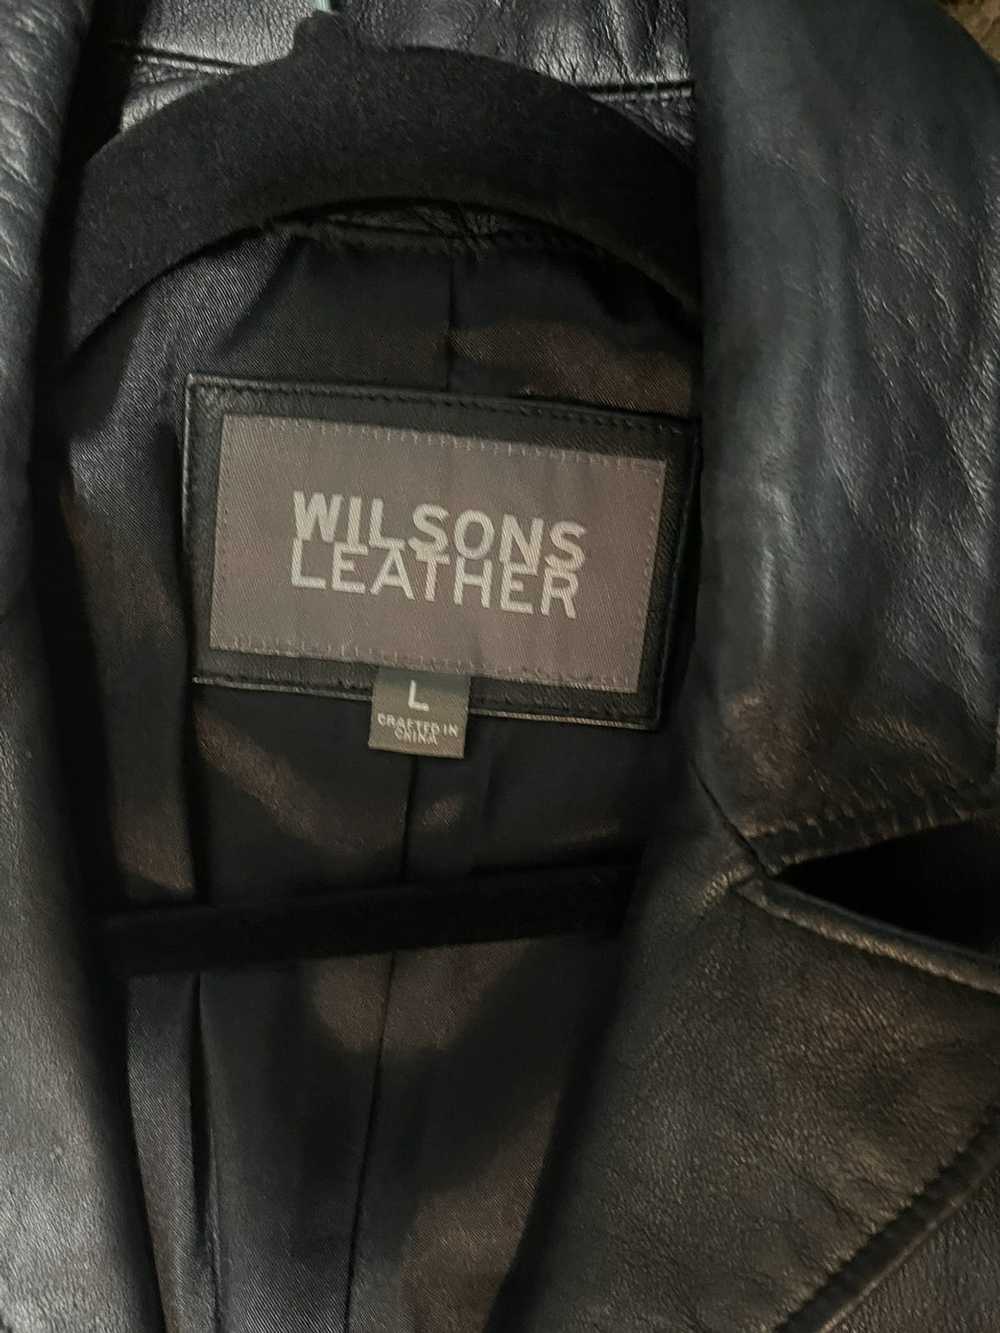 Wilsons Leather Vintage leather jacket - image 3